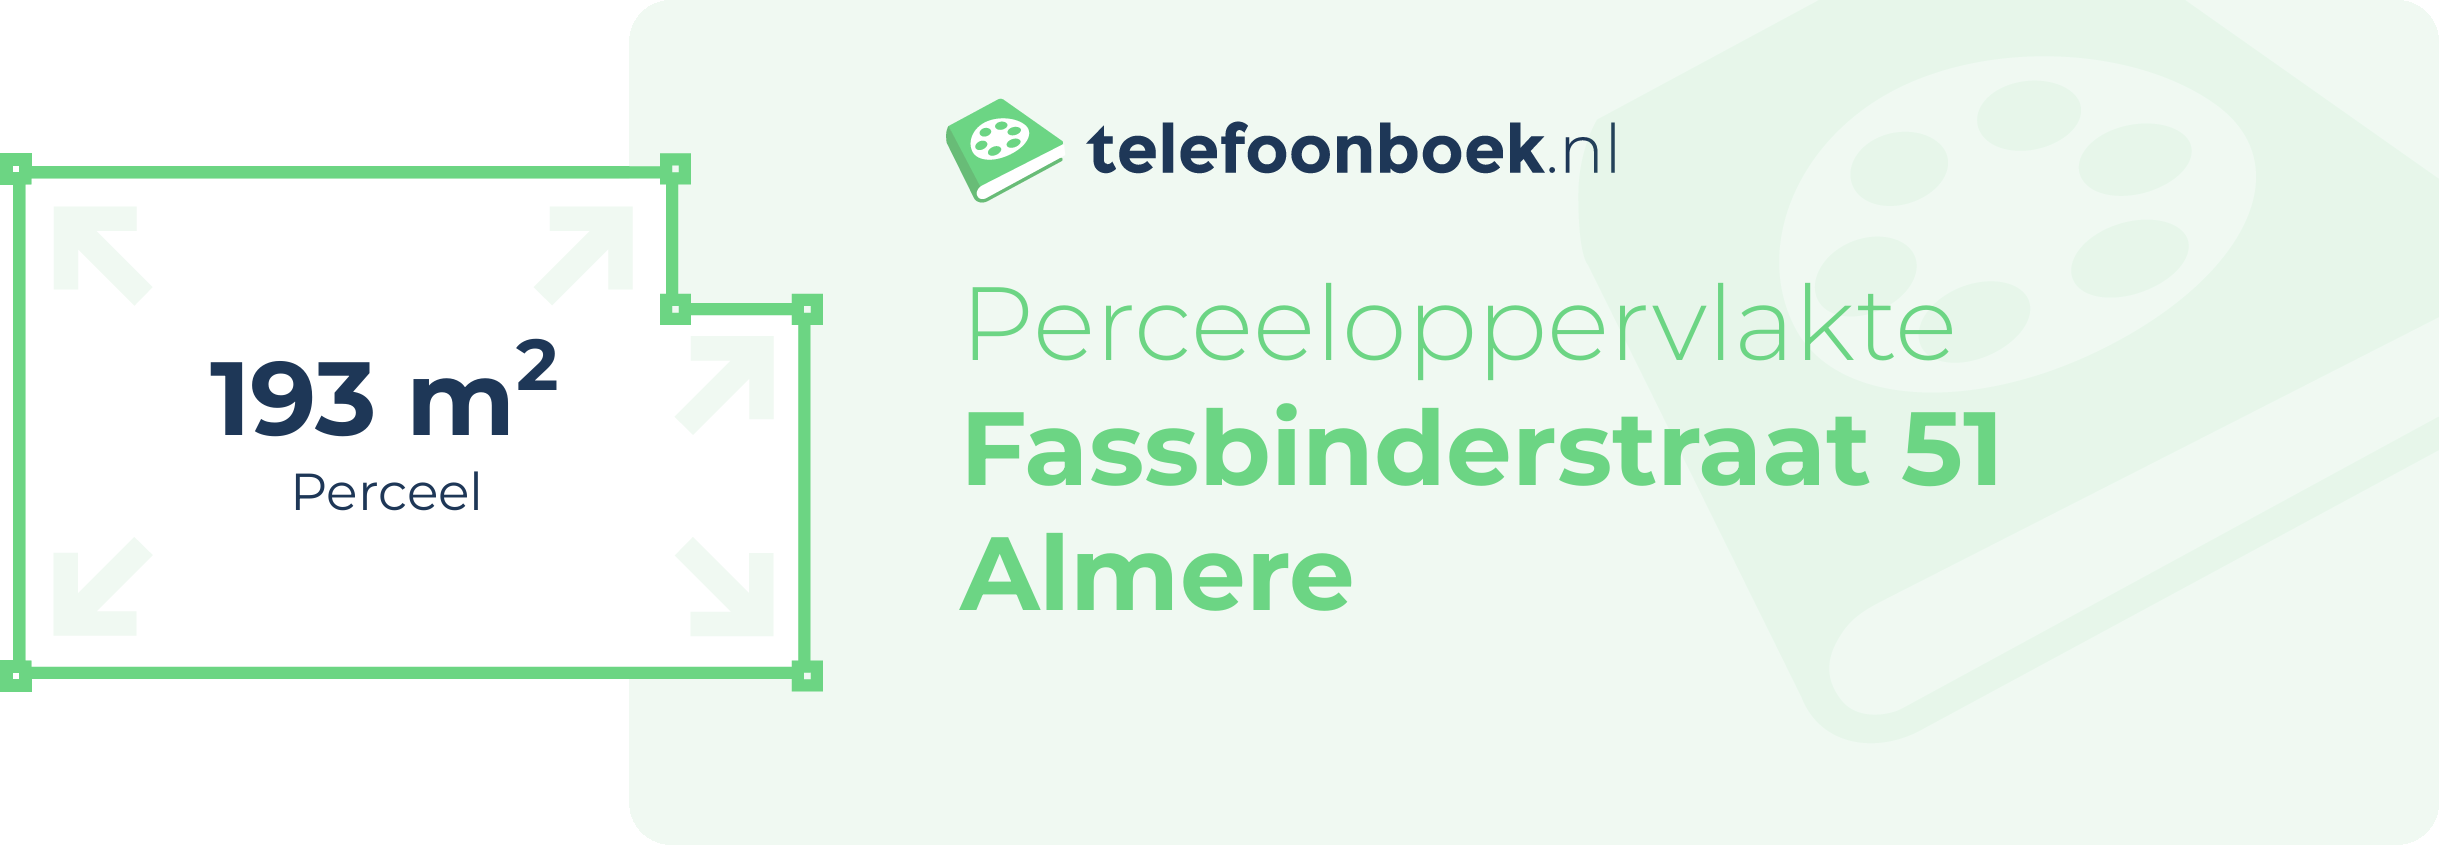 Perceeloppervlakte Fassbinderstraat 51 Almere